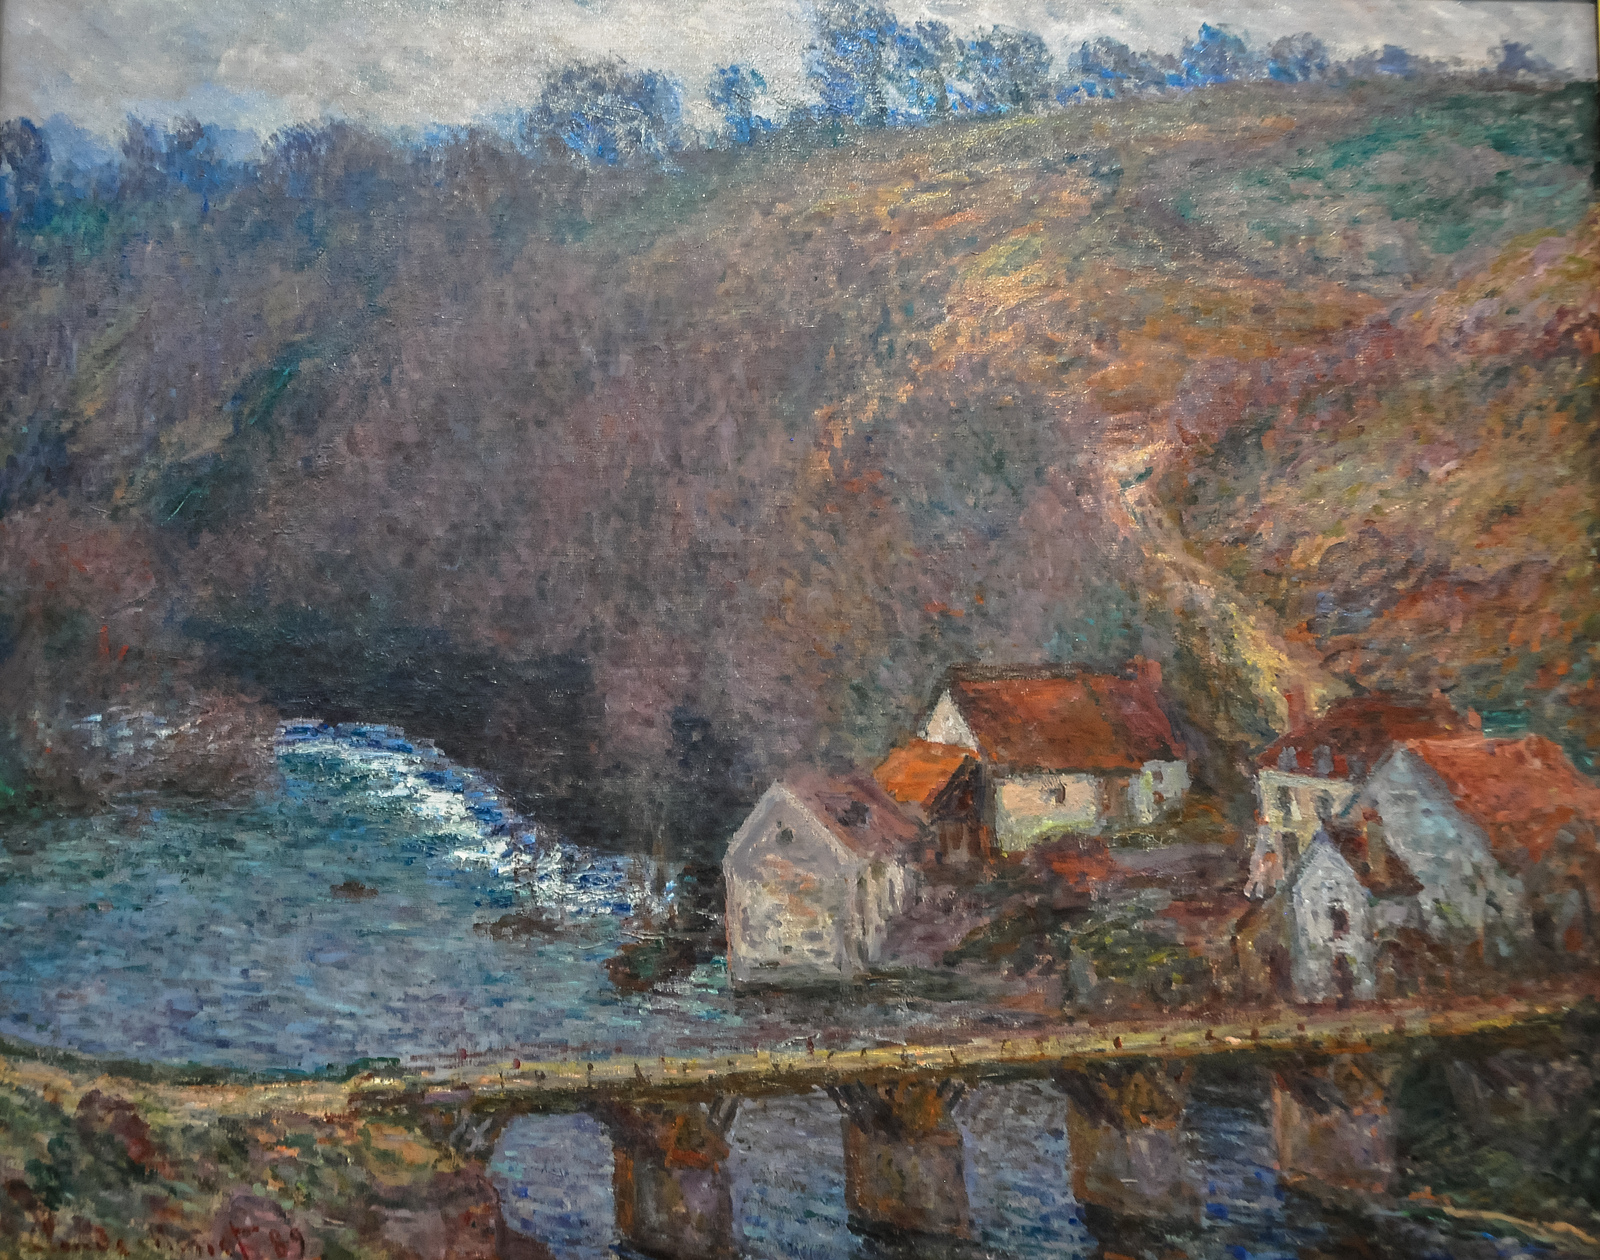 Claude+Monet-1840-1926 (751).jpg